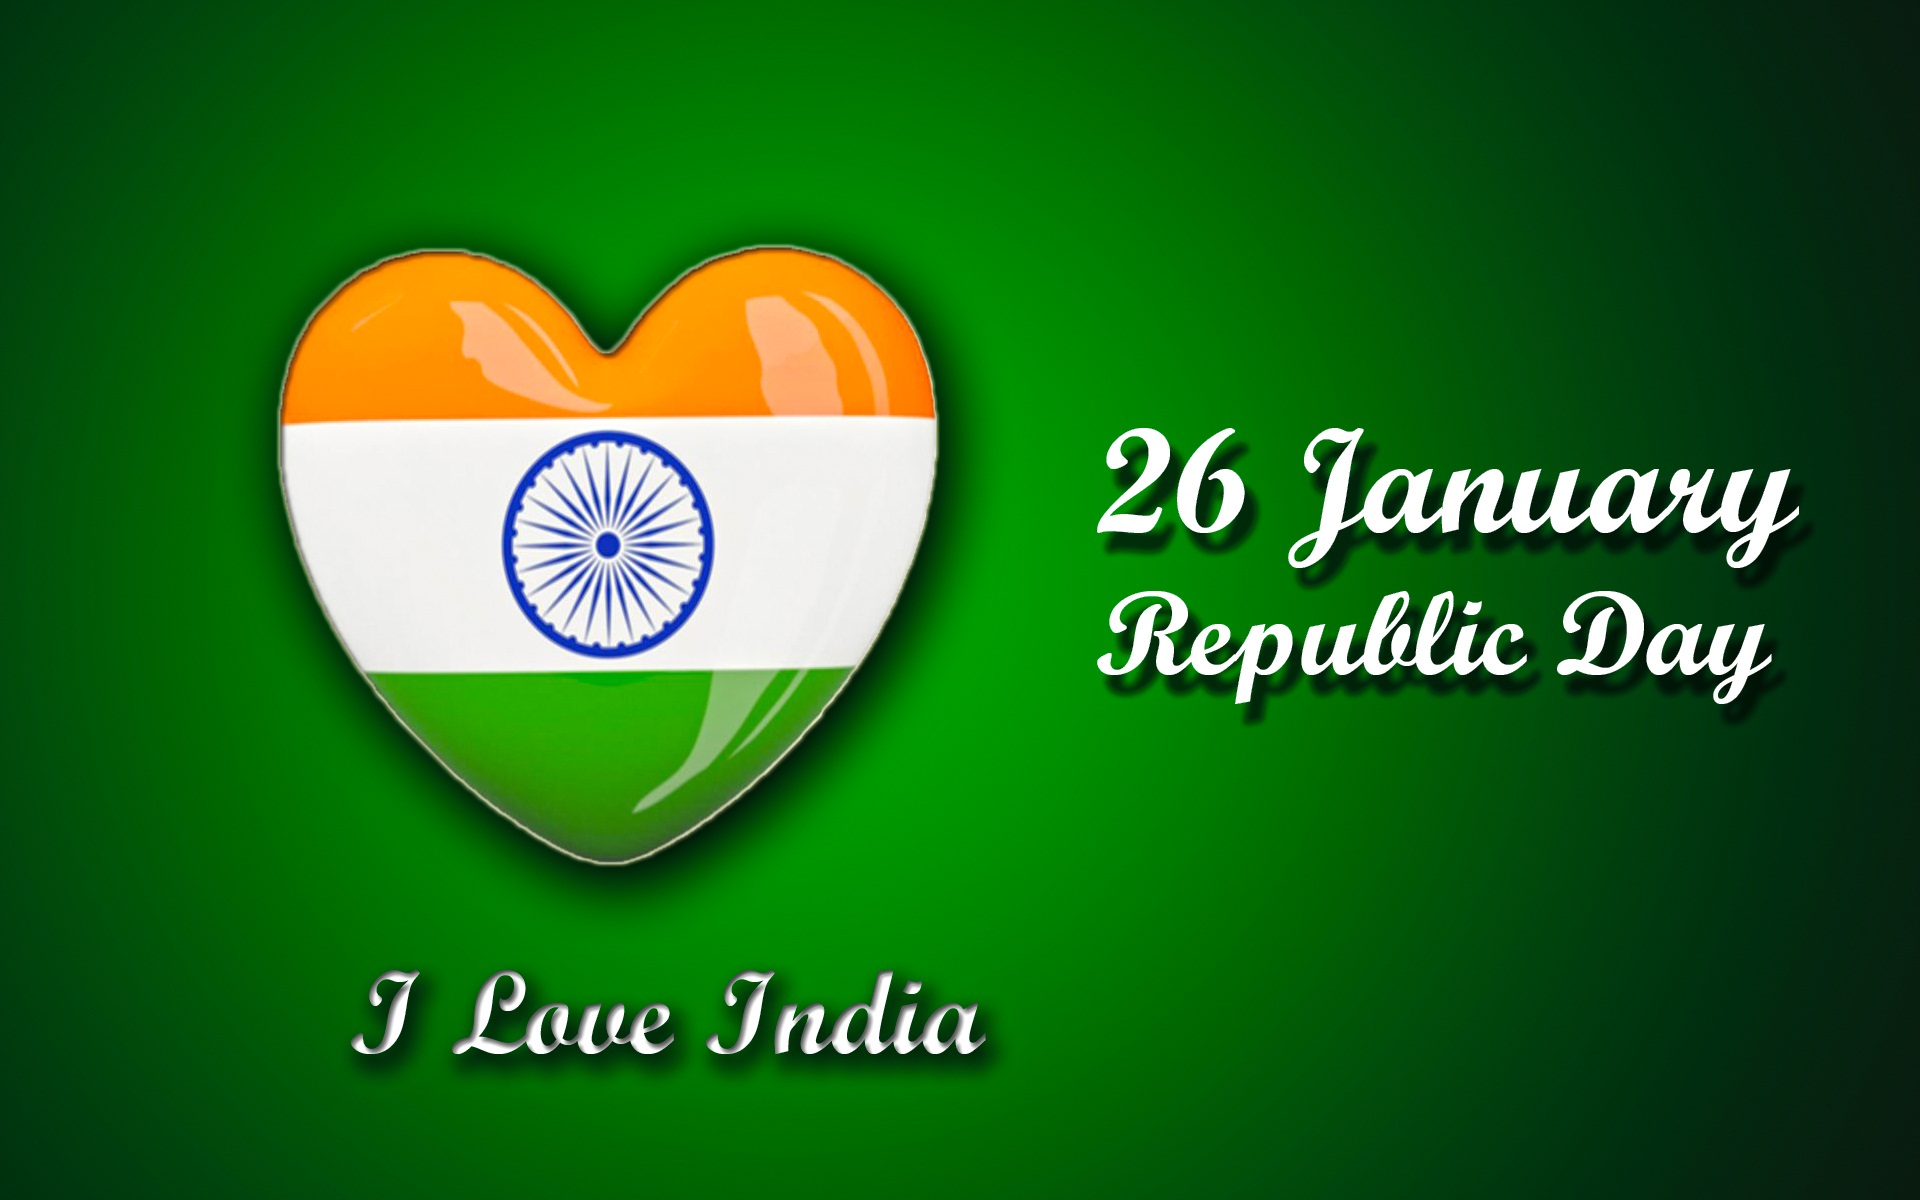 Indian Republic Day Wallpaper Hd - Full Hd 26 January - 1920x1200 Wallpaper  